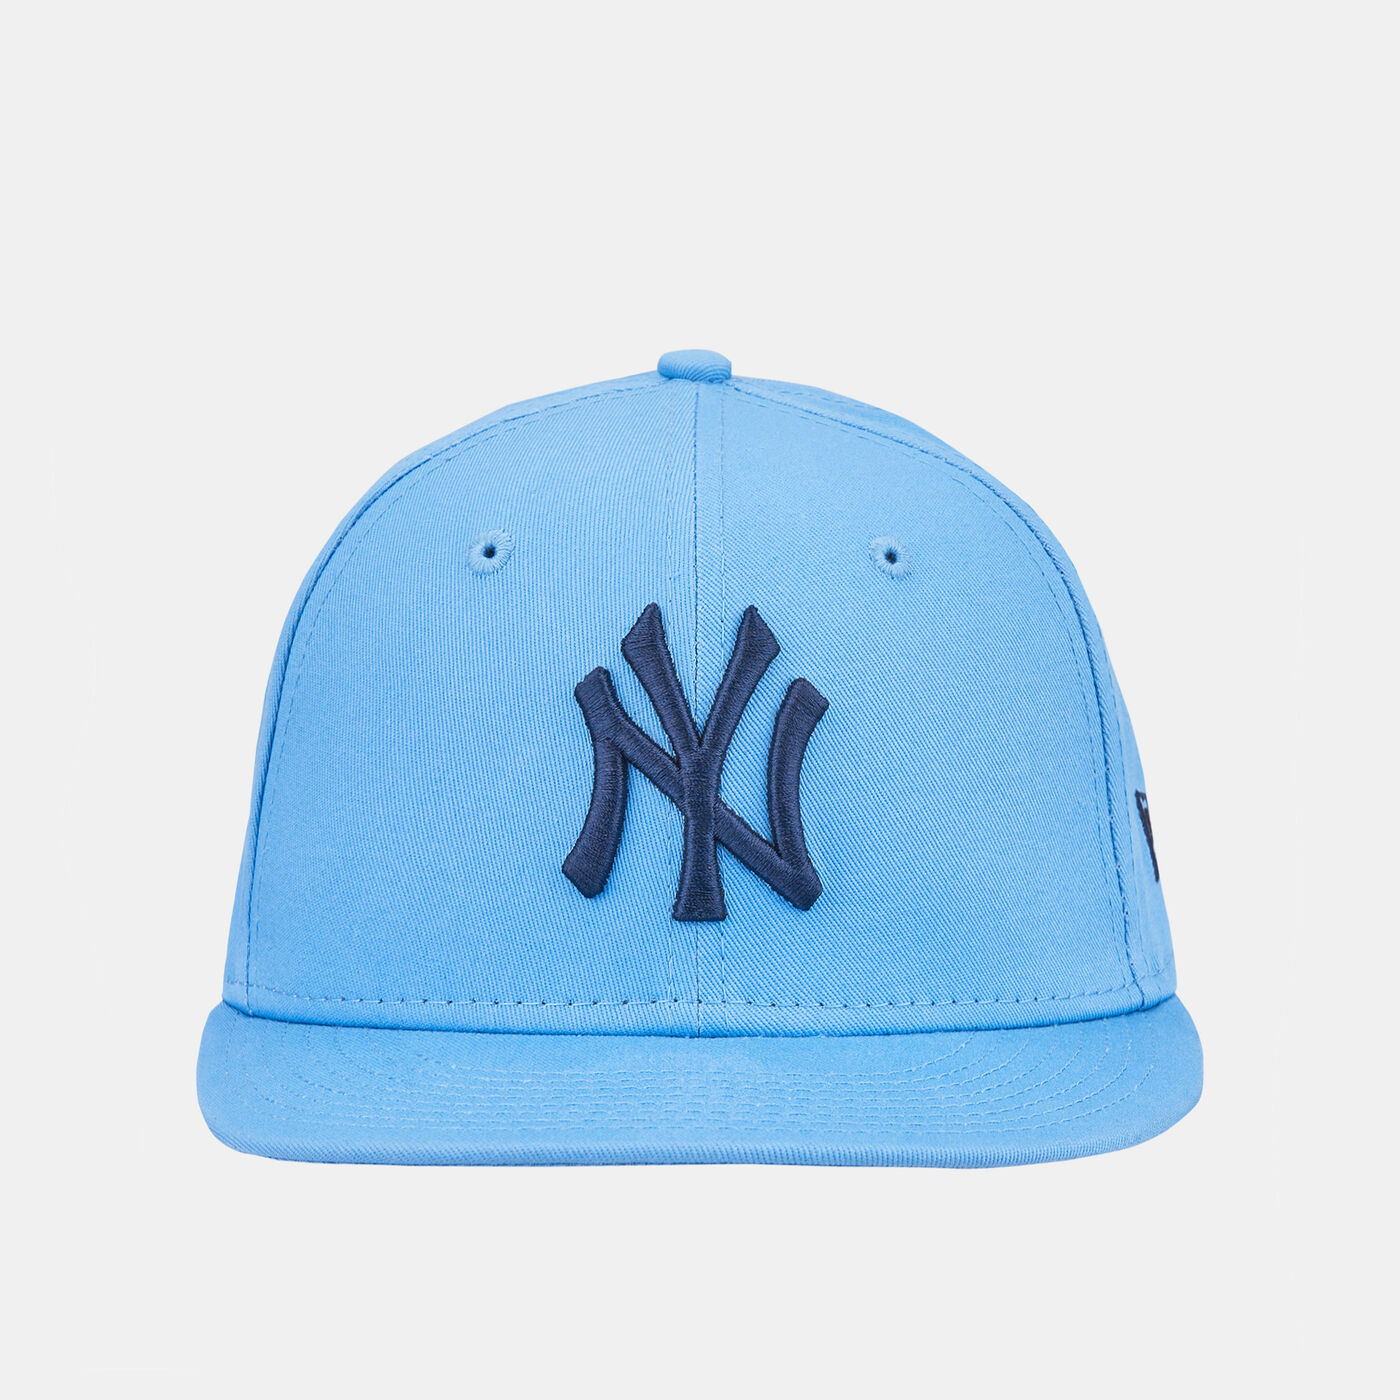 Men's New York Yankees League Essential 9FIFTY Snapback Cap